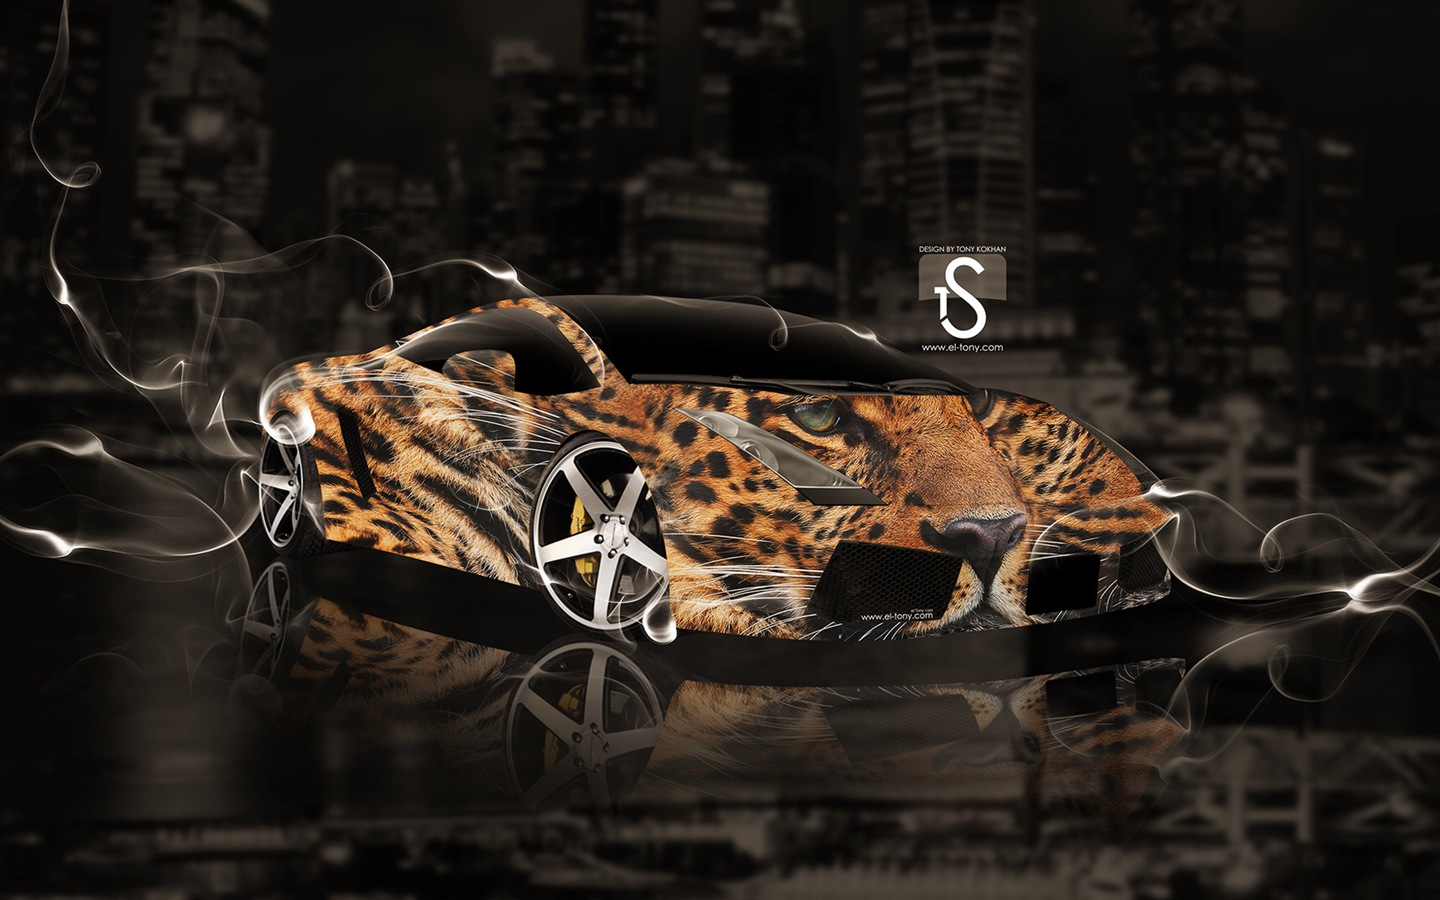 Creative dream car design wallpaper, Animal automotive #10 - 1440x900